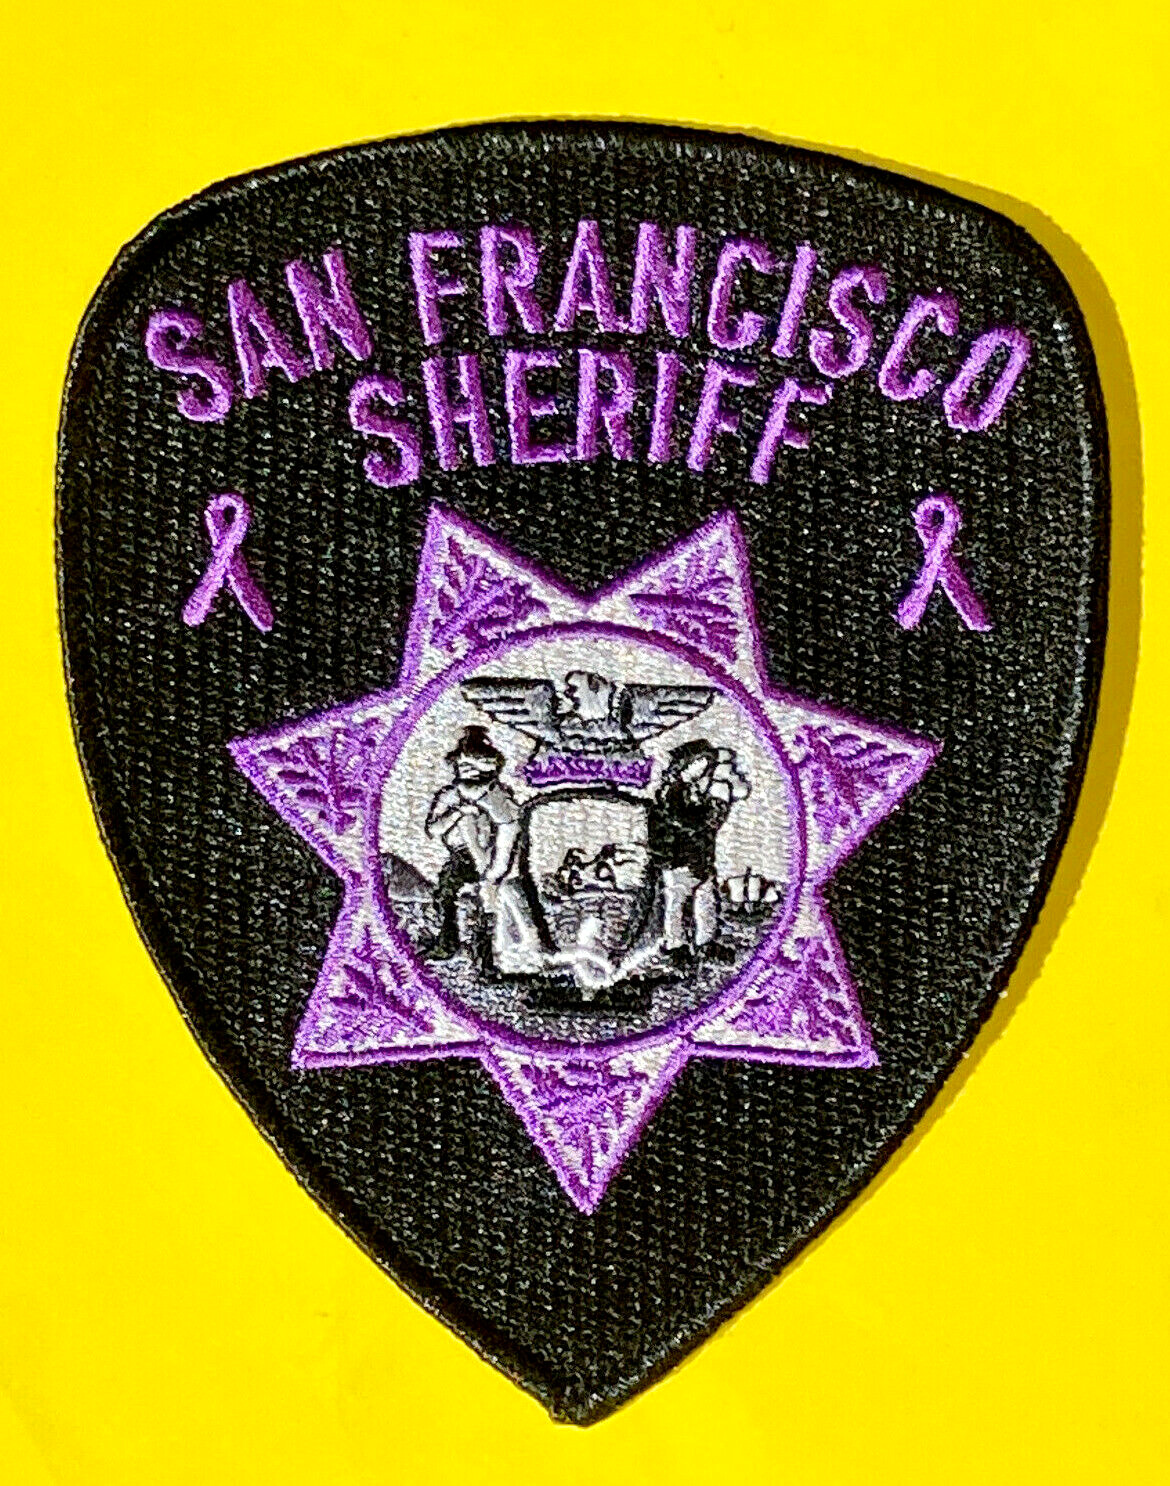 SAN FRANCISCO SHERIFF PURPLE DOMESTIC VIOLENCE AWARENESS POLICE PATCH